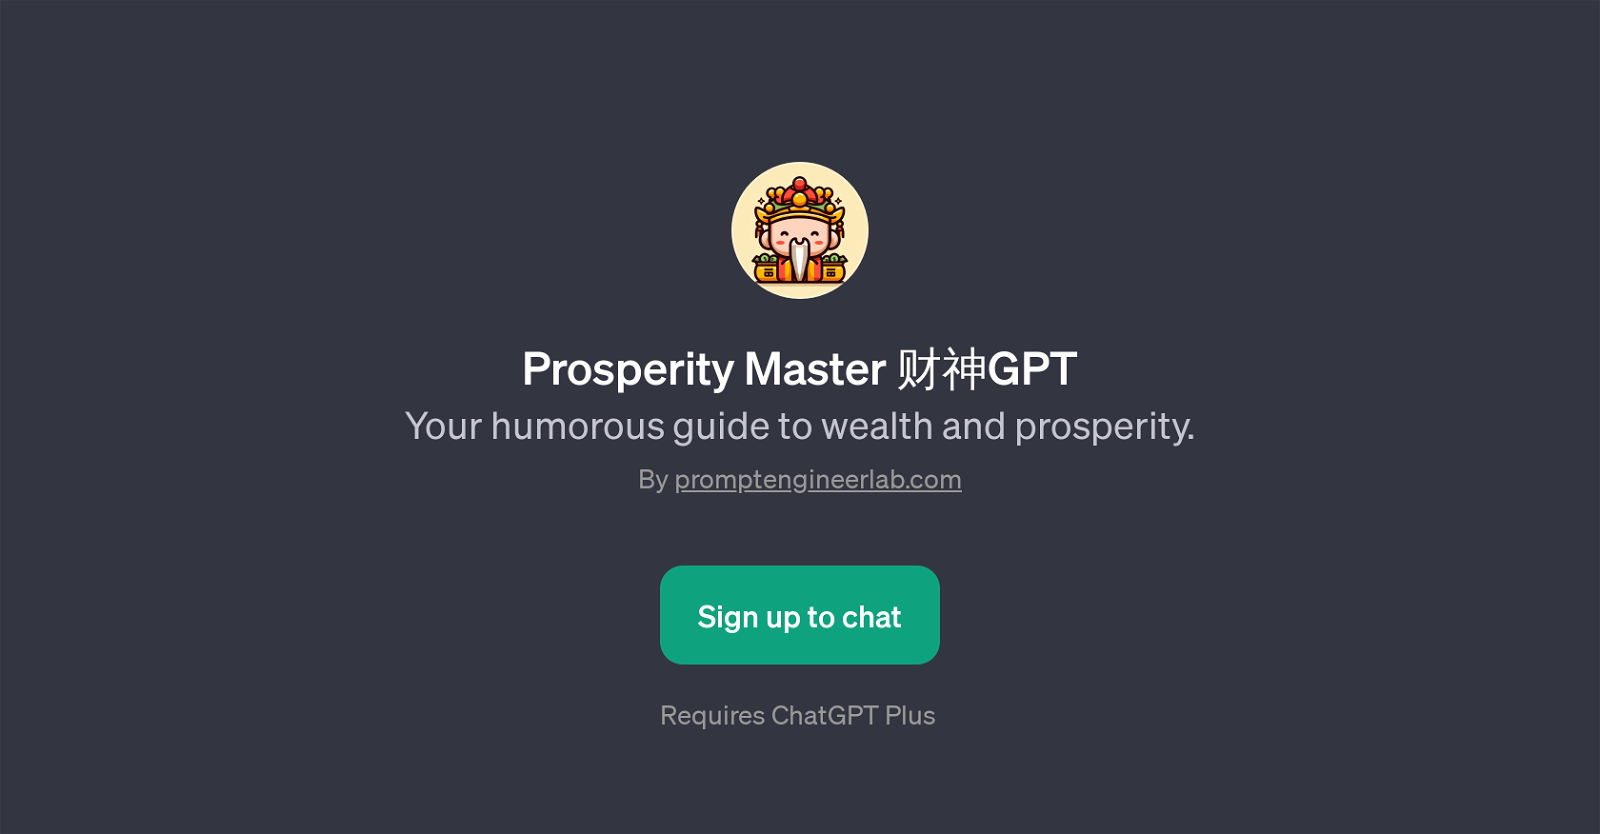 Prosperity Master GPT website